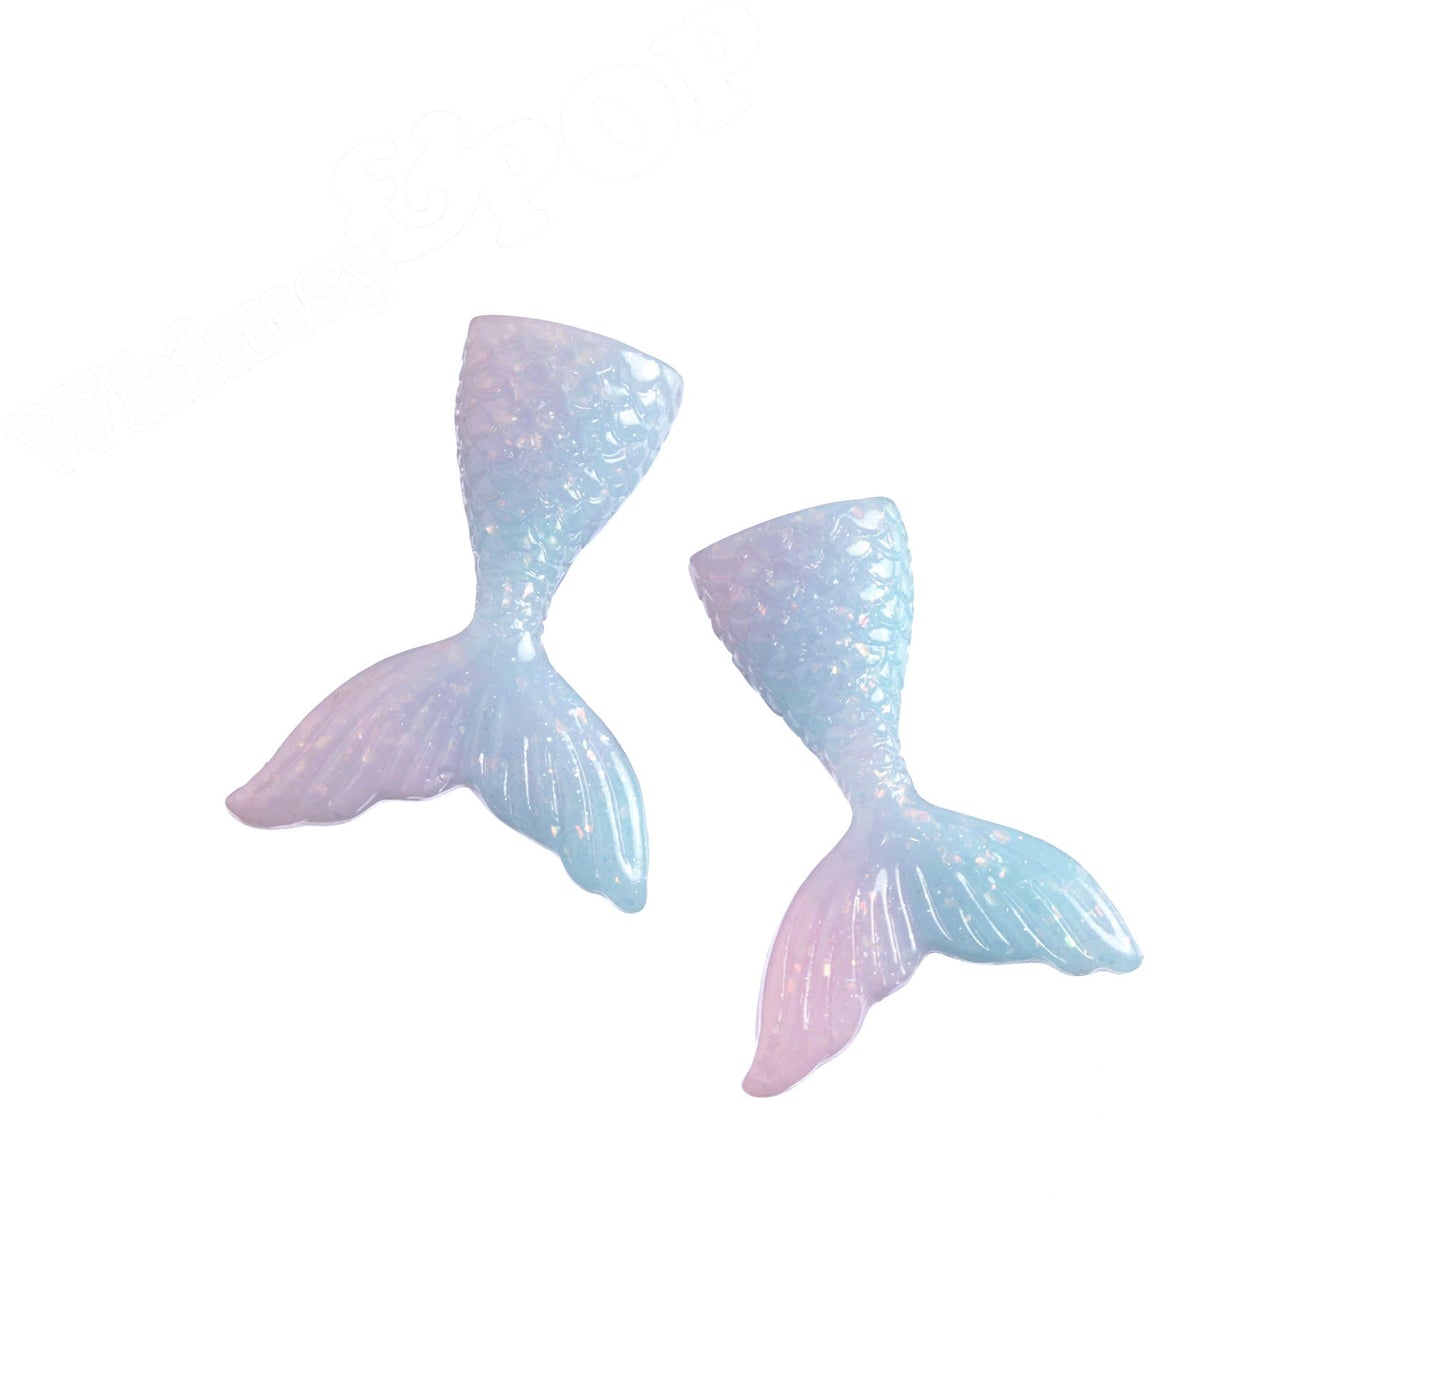 Glitter Mermaid Tail Charm Pendant, Mermaid Fish Resin Tail Charm Pendant, Mermaid Charm, Slime Charms, Glitter Tail (C1-32-33)